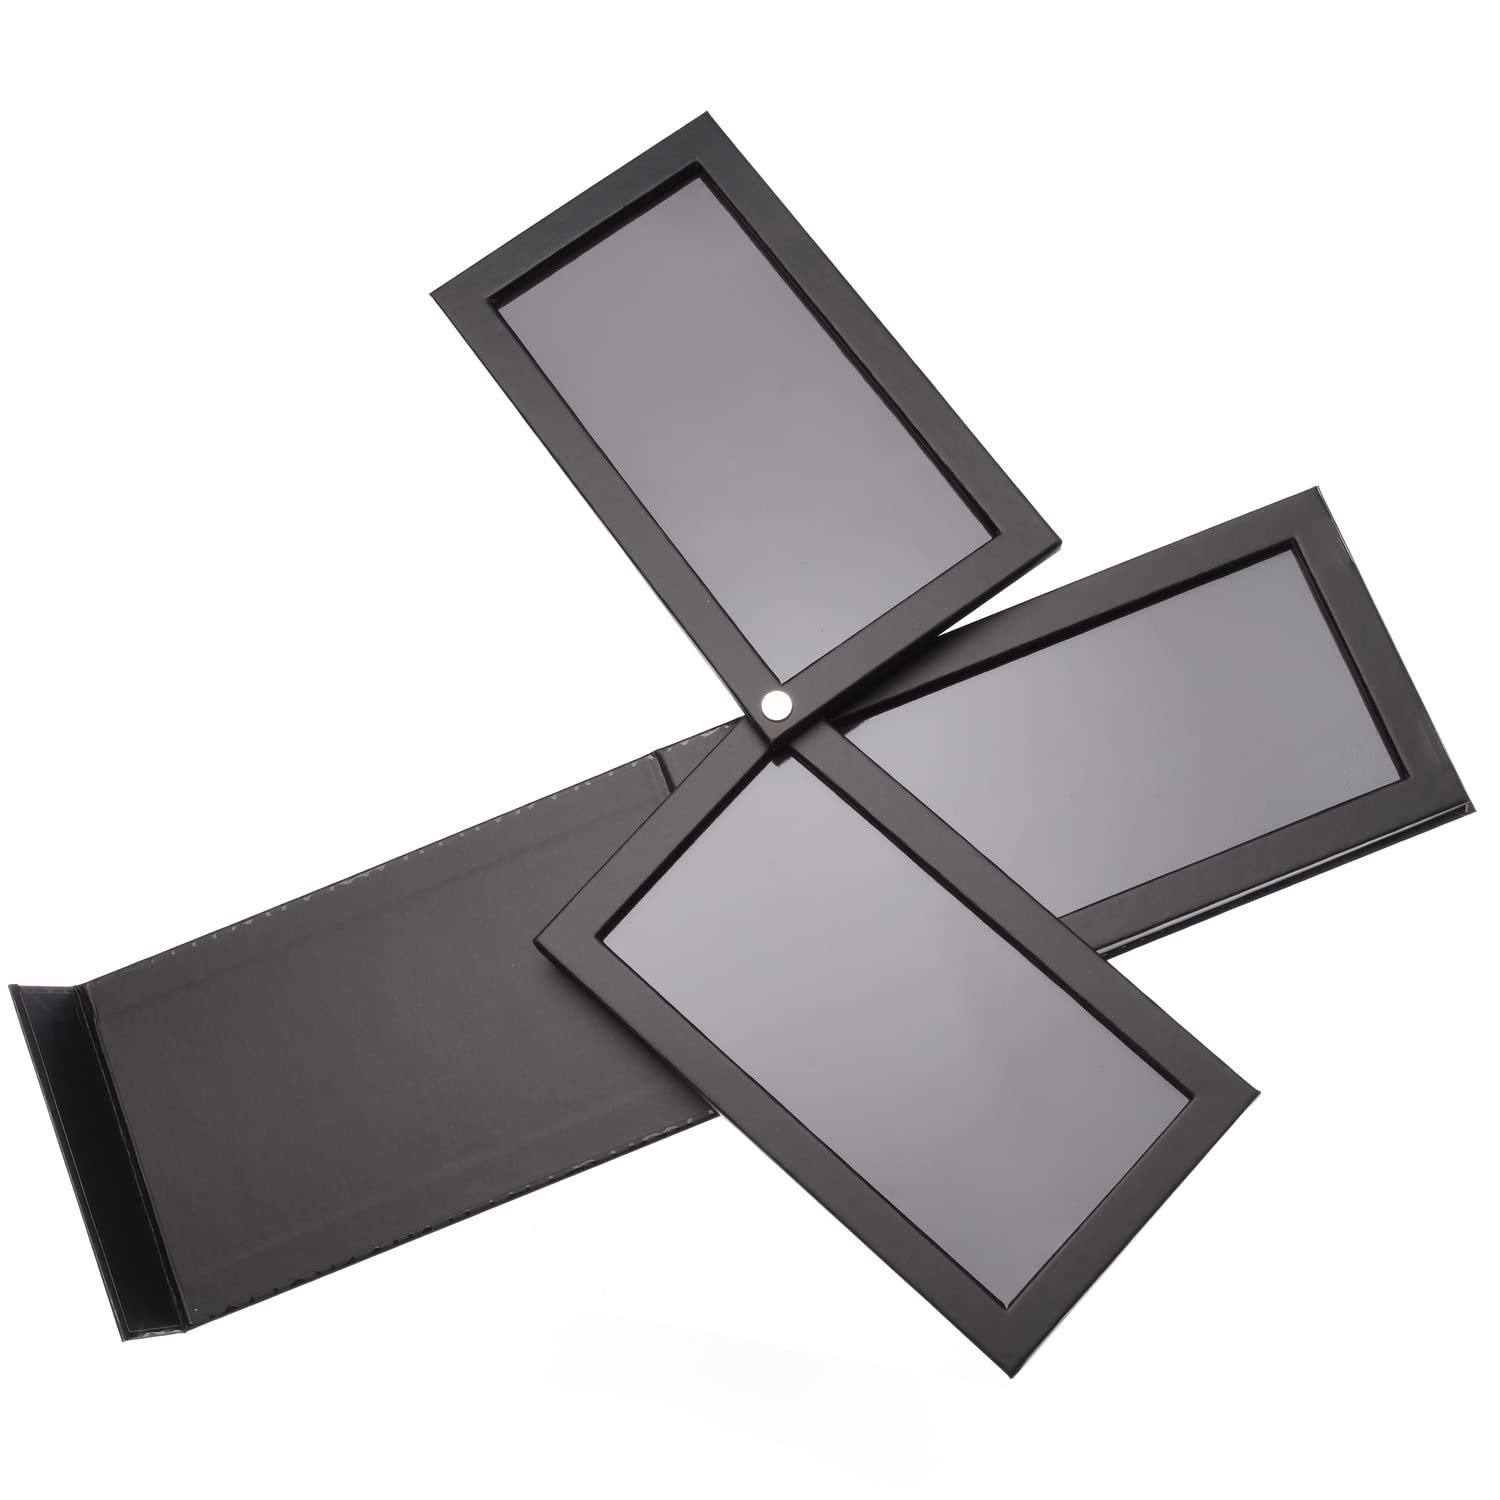 Allwon 3-Layer Rotation Magnetic Palette 3 in1 Empty Makeup Palette Storage Box for Eyeshadow Lipstick Blush Powder (Black)